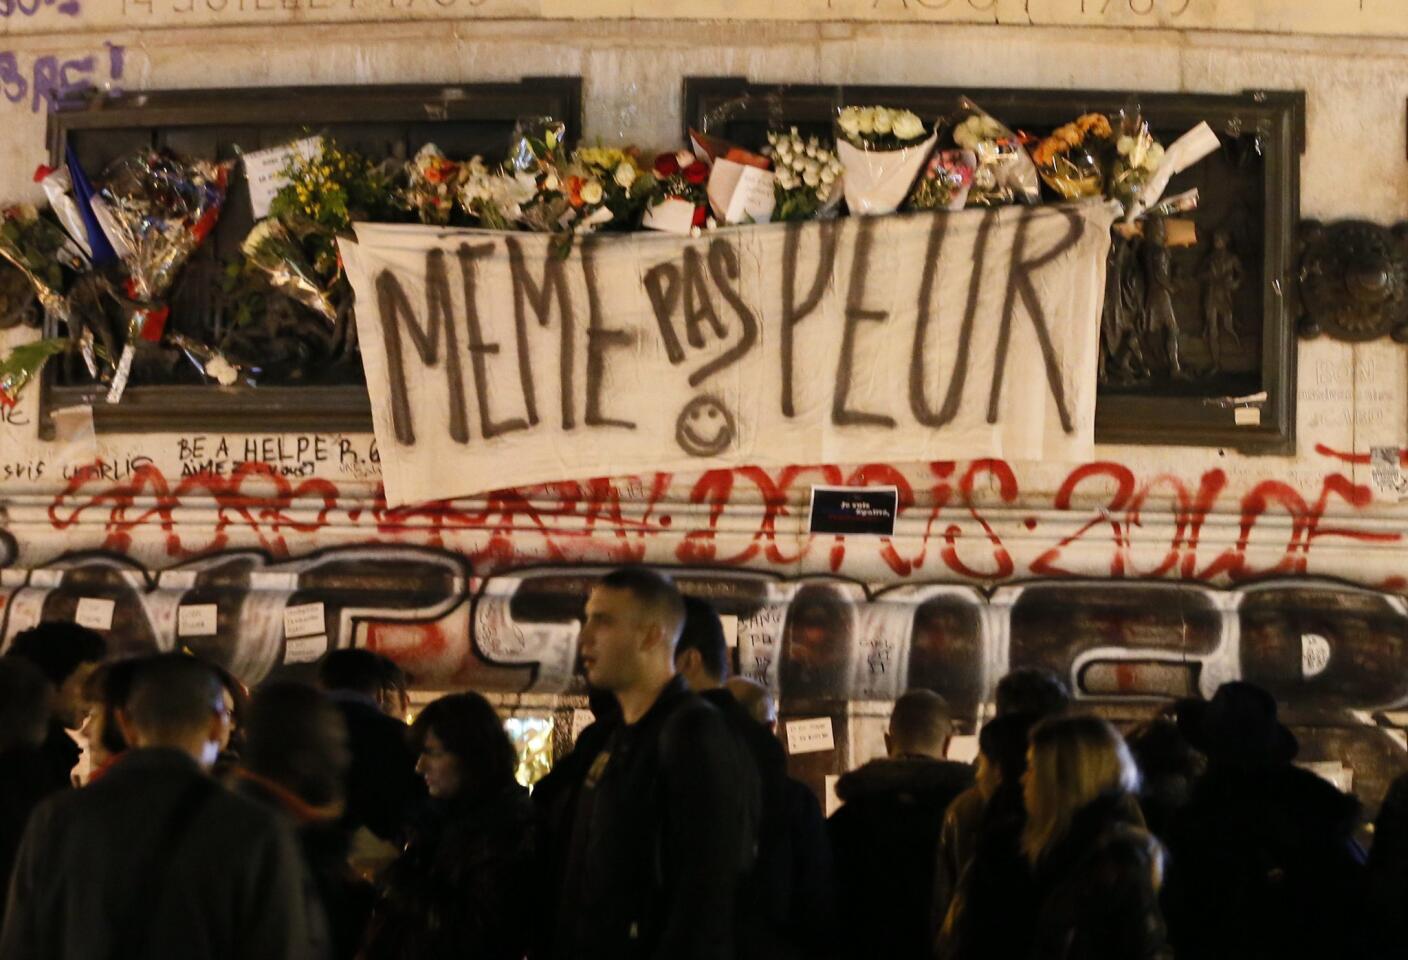 Attacks in Paris aftermath